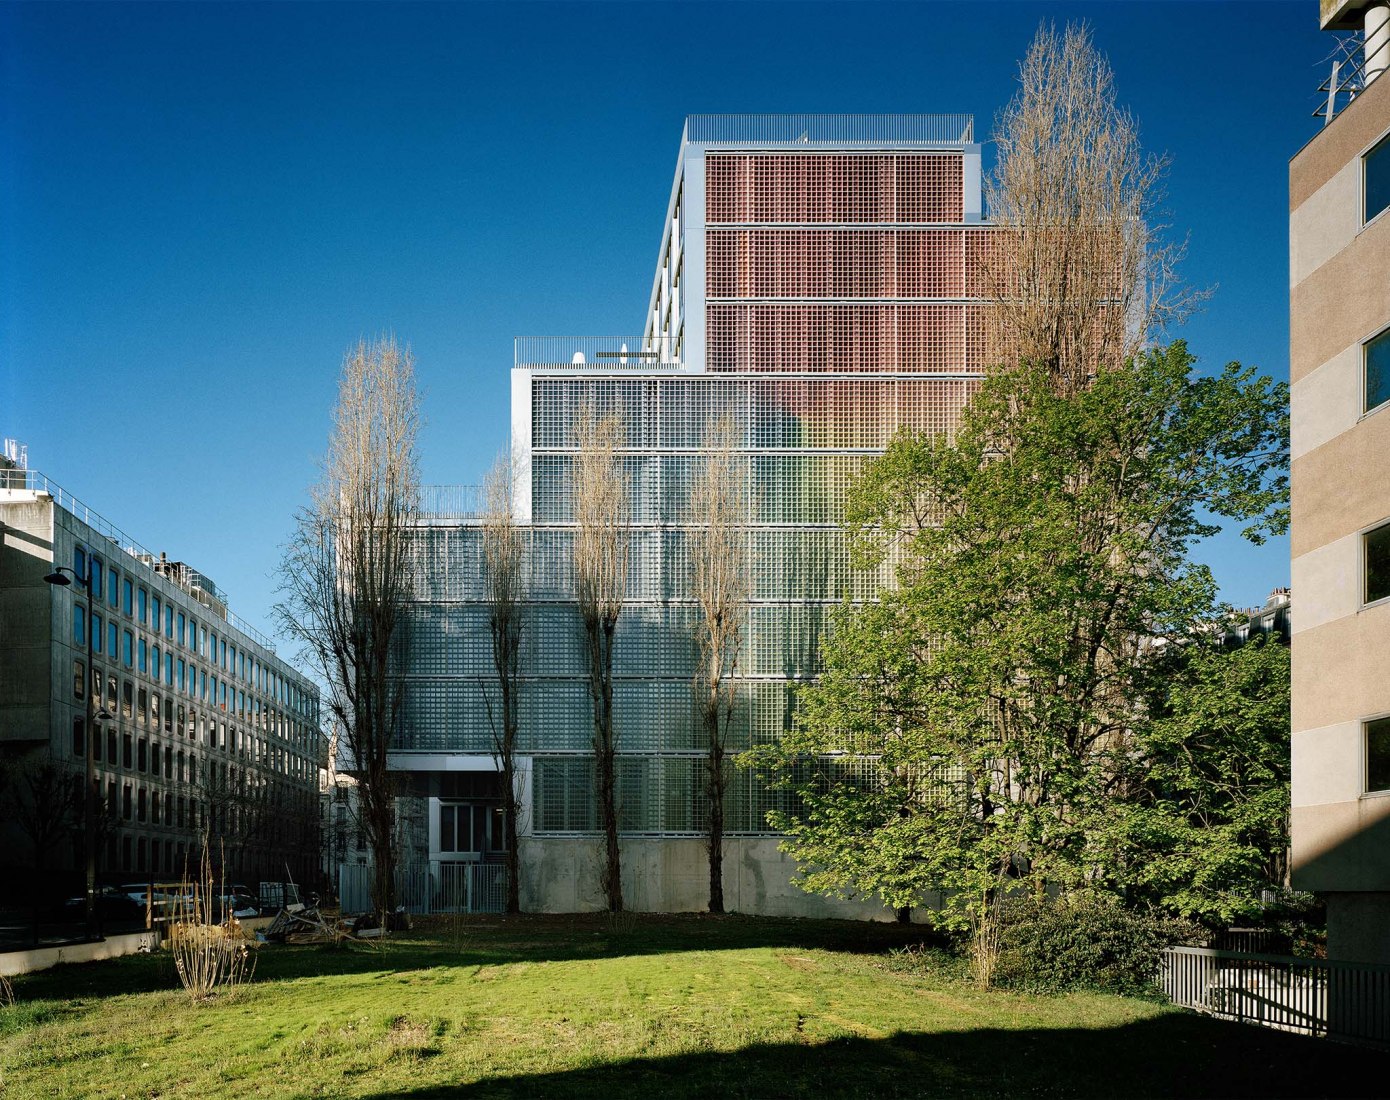 Reestructuración de edificio de oficinas por Monsieur Vilo Bach Architecture. Fotografía por Axel Dahl.